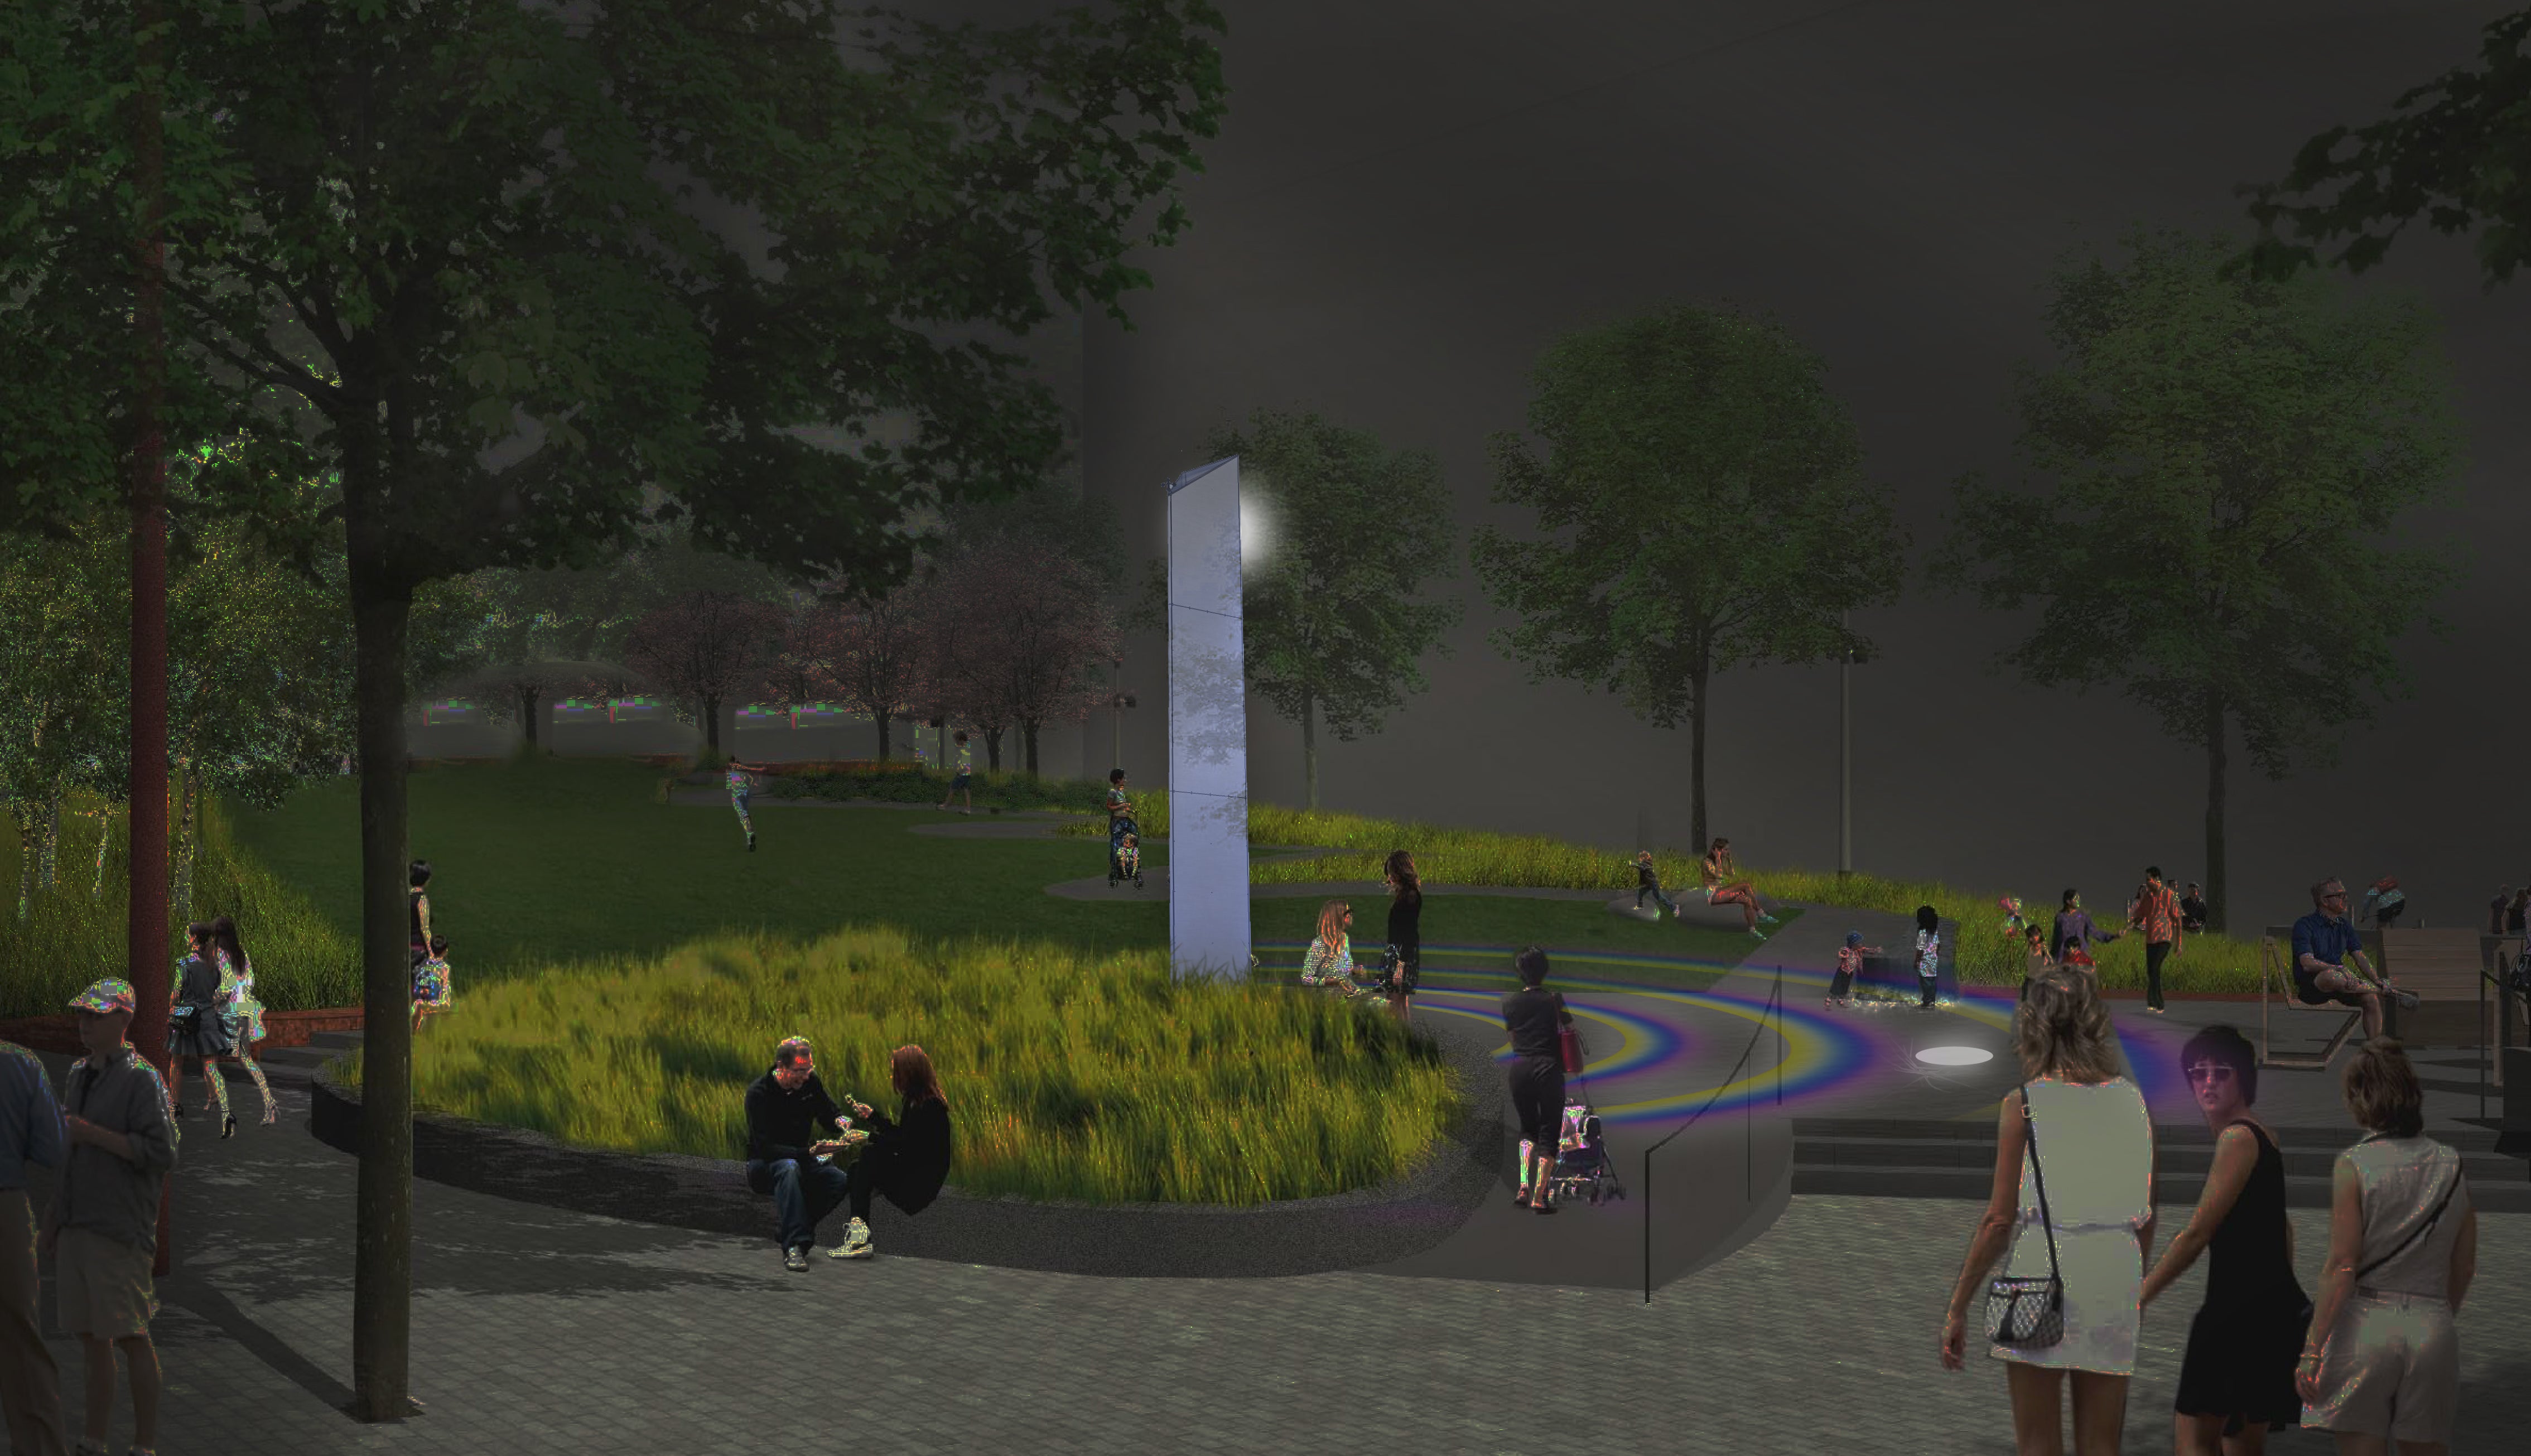 Artist rendering of the future public art installation LIGHT KEEPER in Aitken Place Park.